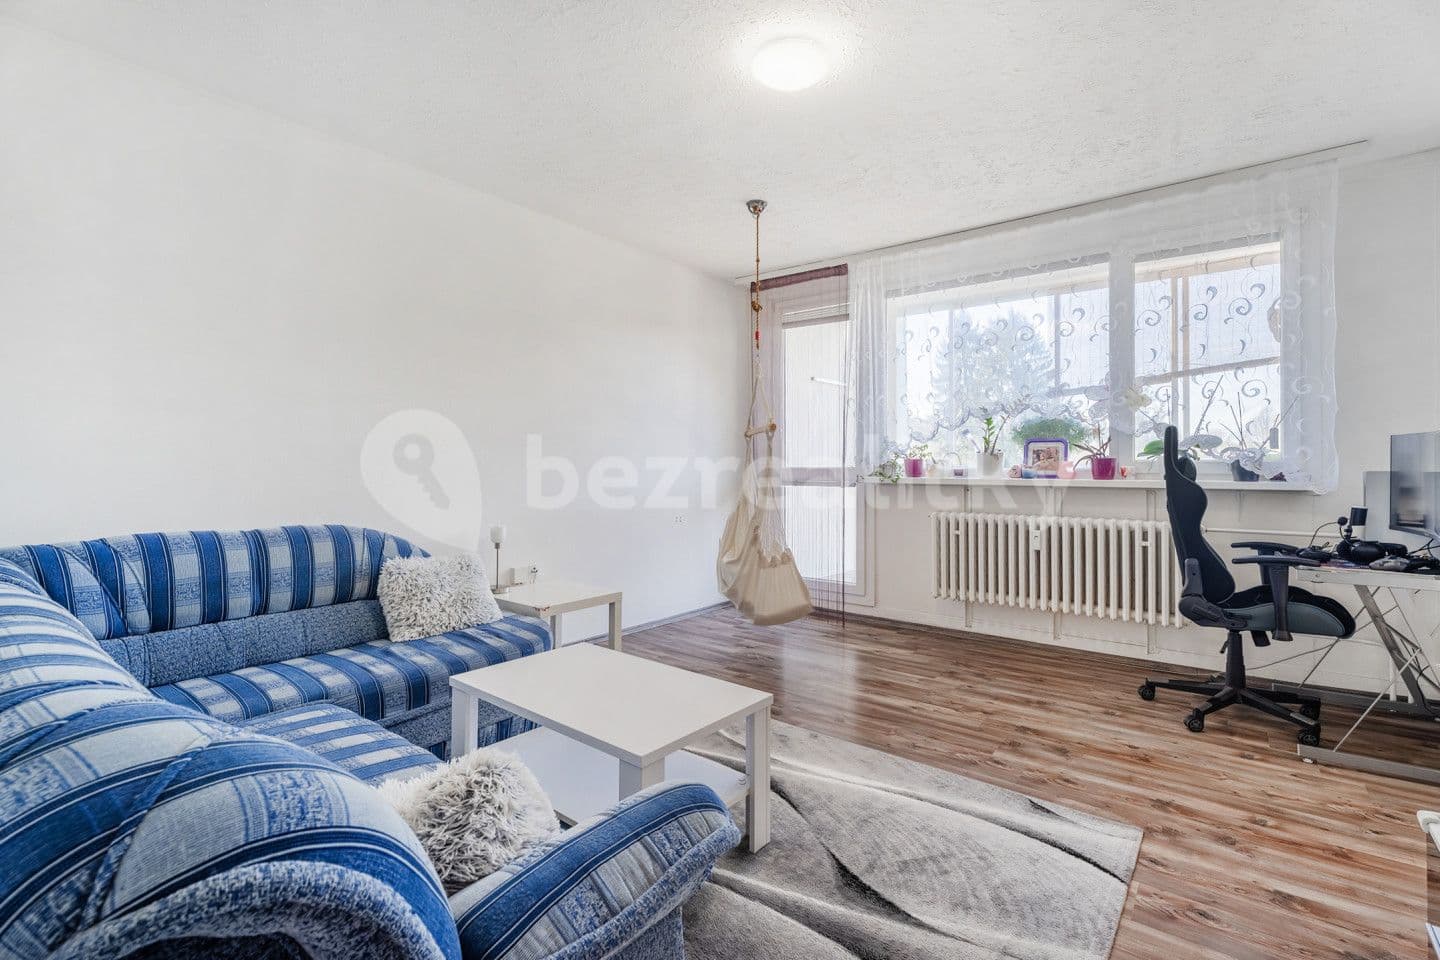 3 bedroom flat for sale, 70 m², Polní, Rumburk, Ústecký Region